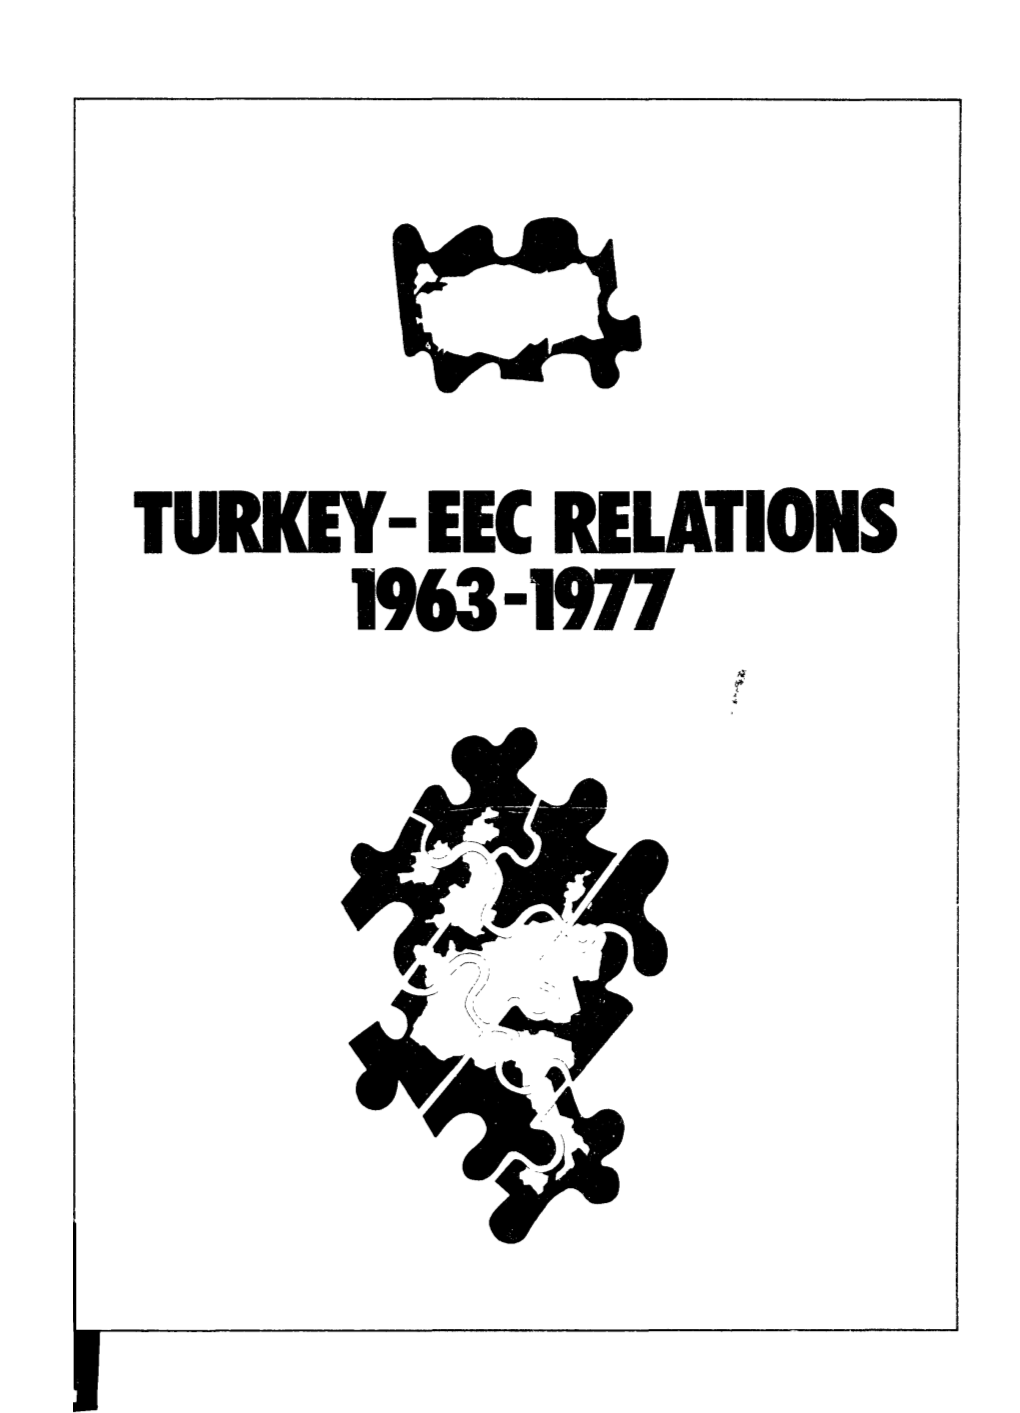 TURKEY- EEC RELATIONS 1963-1977 Introduction